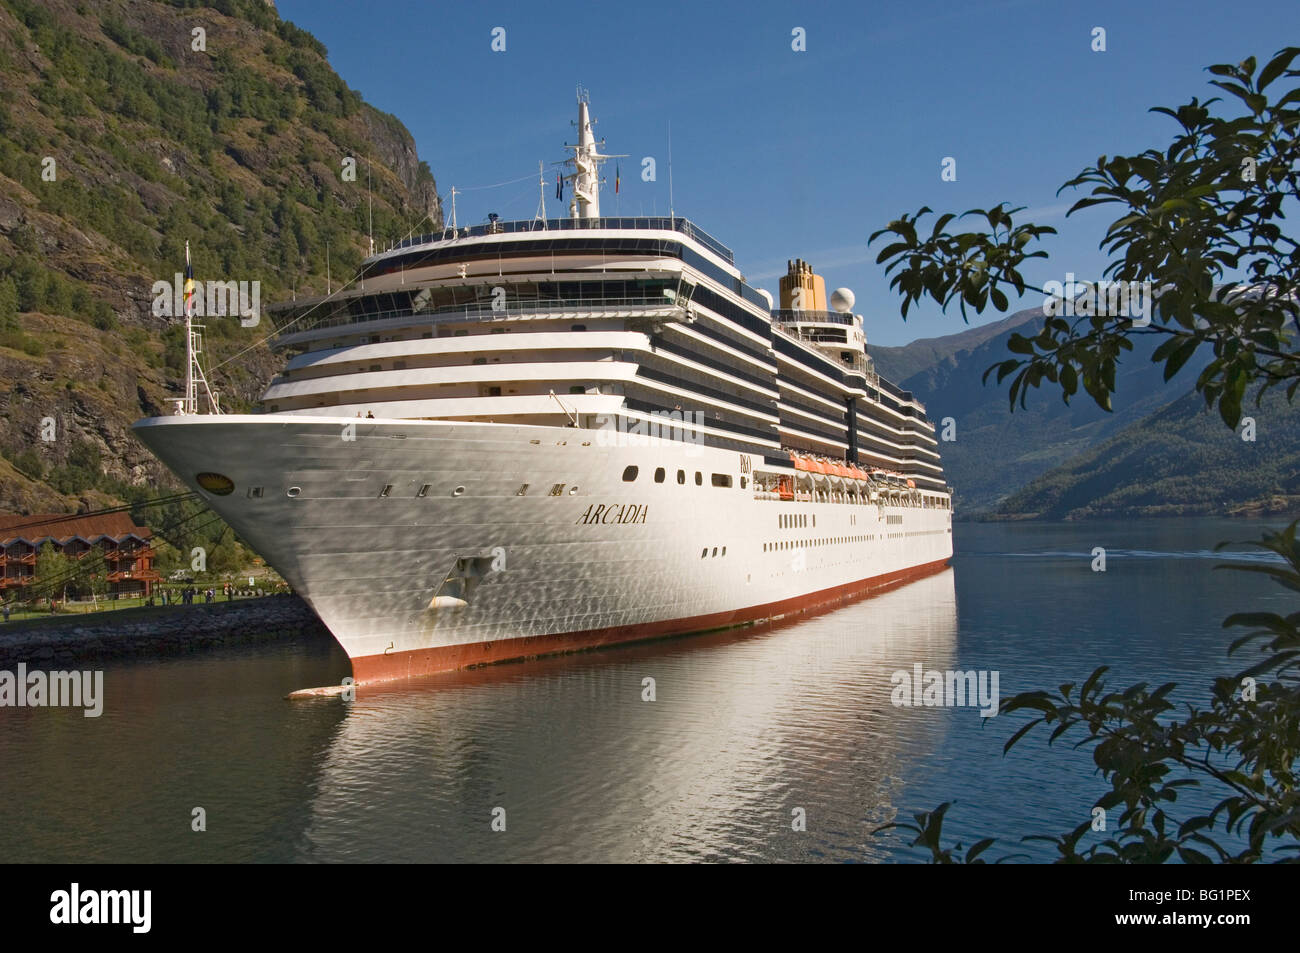 Cruise ship berthed at Flaams, Fjordland, Norway, Scandinavia, Europe Stock Photo